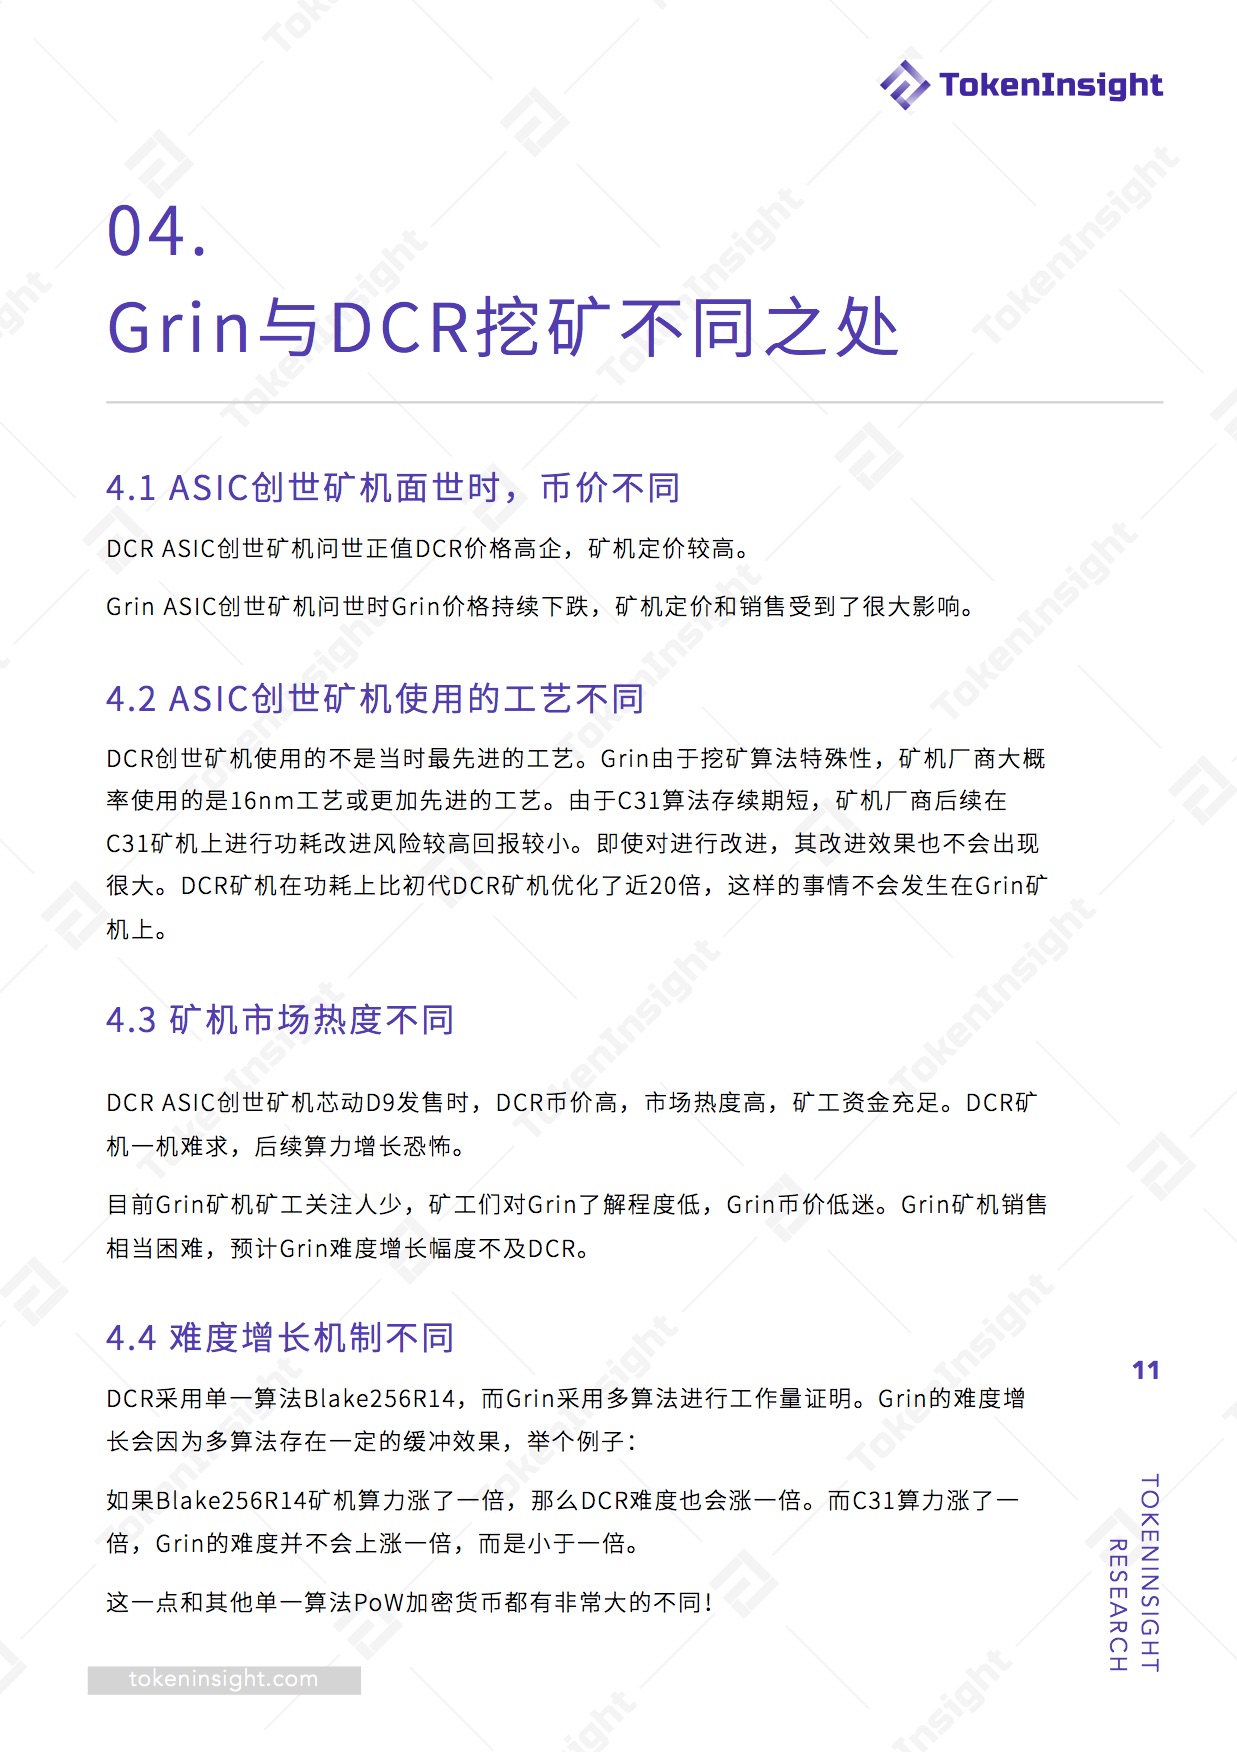 Grin矿机投资可行性分析报告 | TokenInsight配图(11)